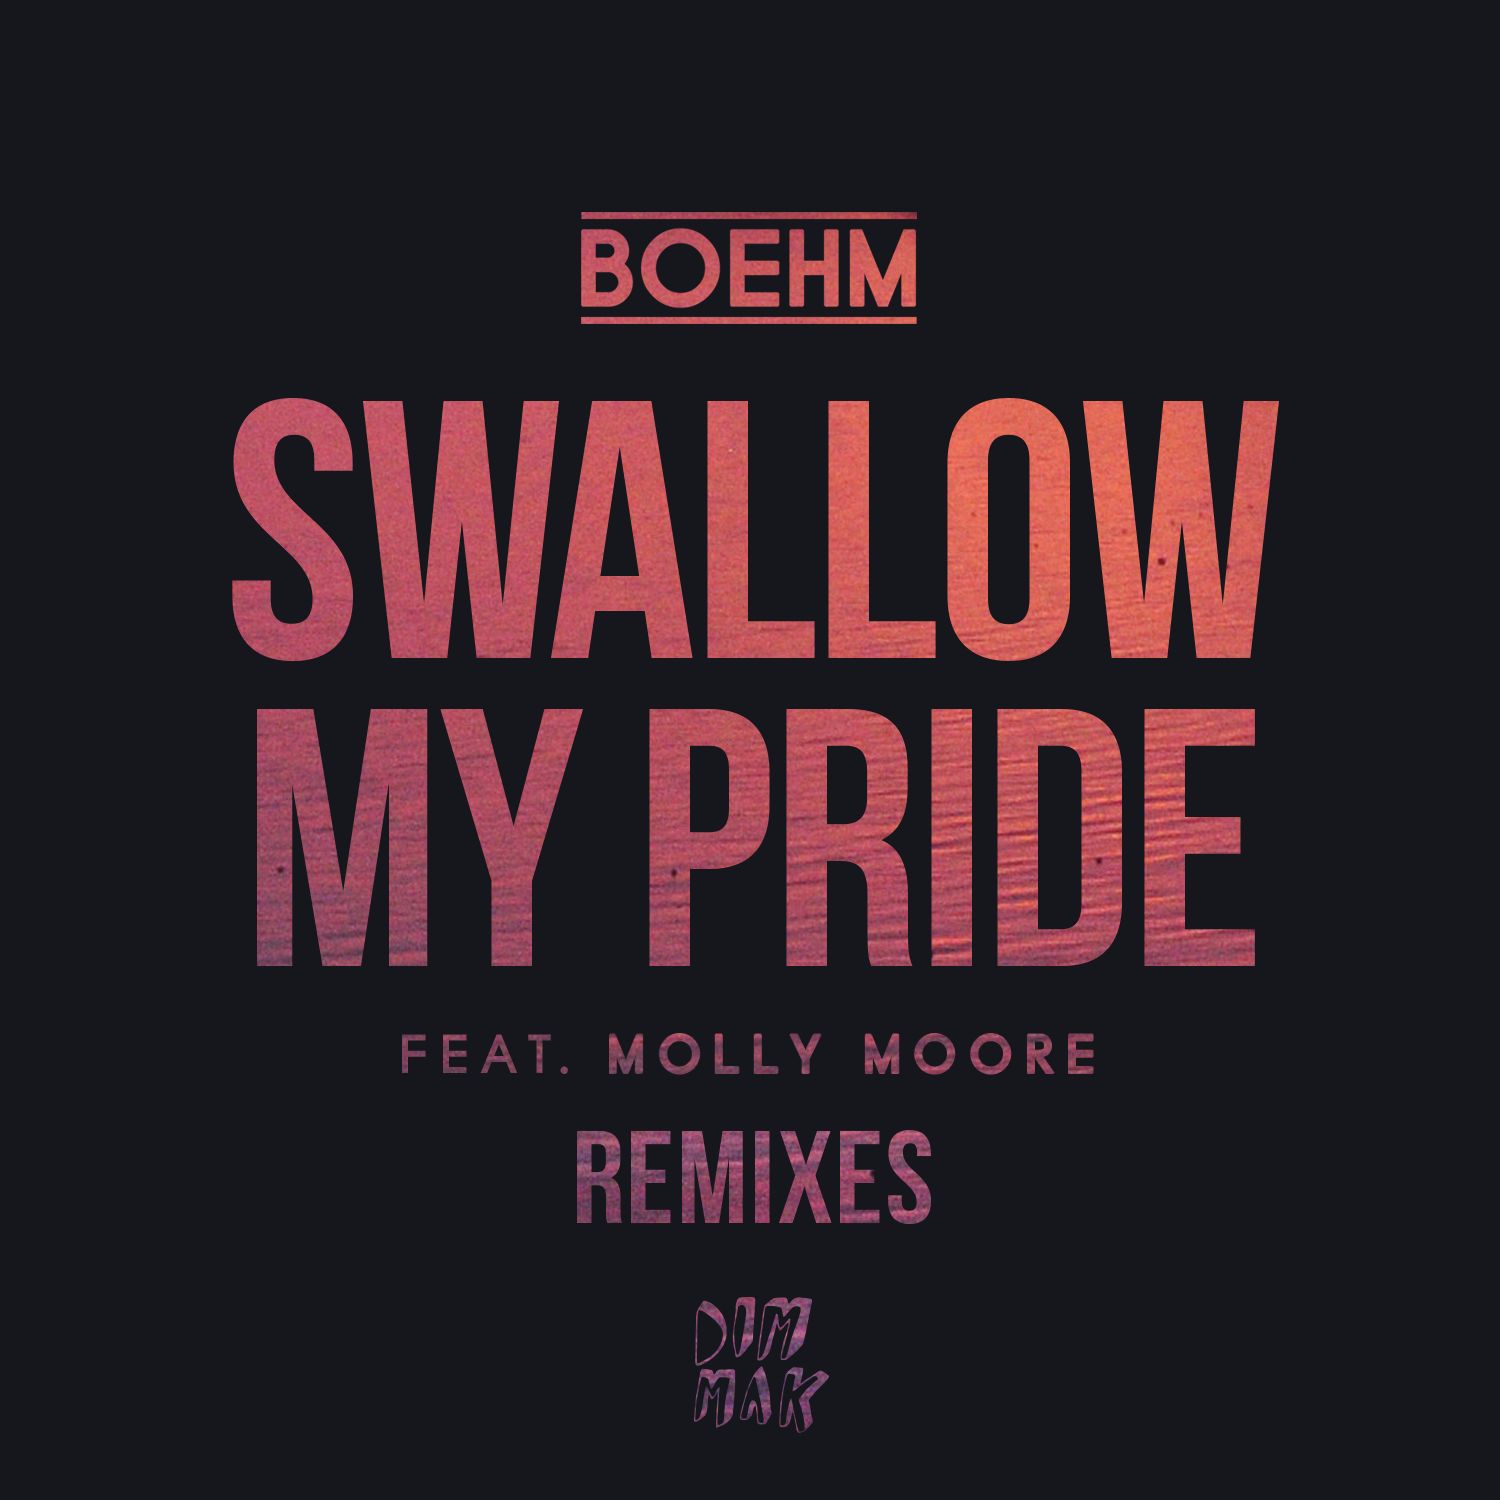 Swallow My Pride (PLS&TY Remix)